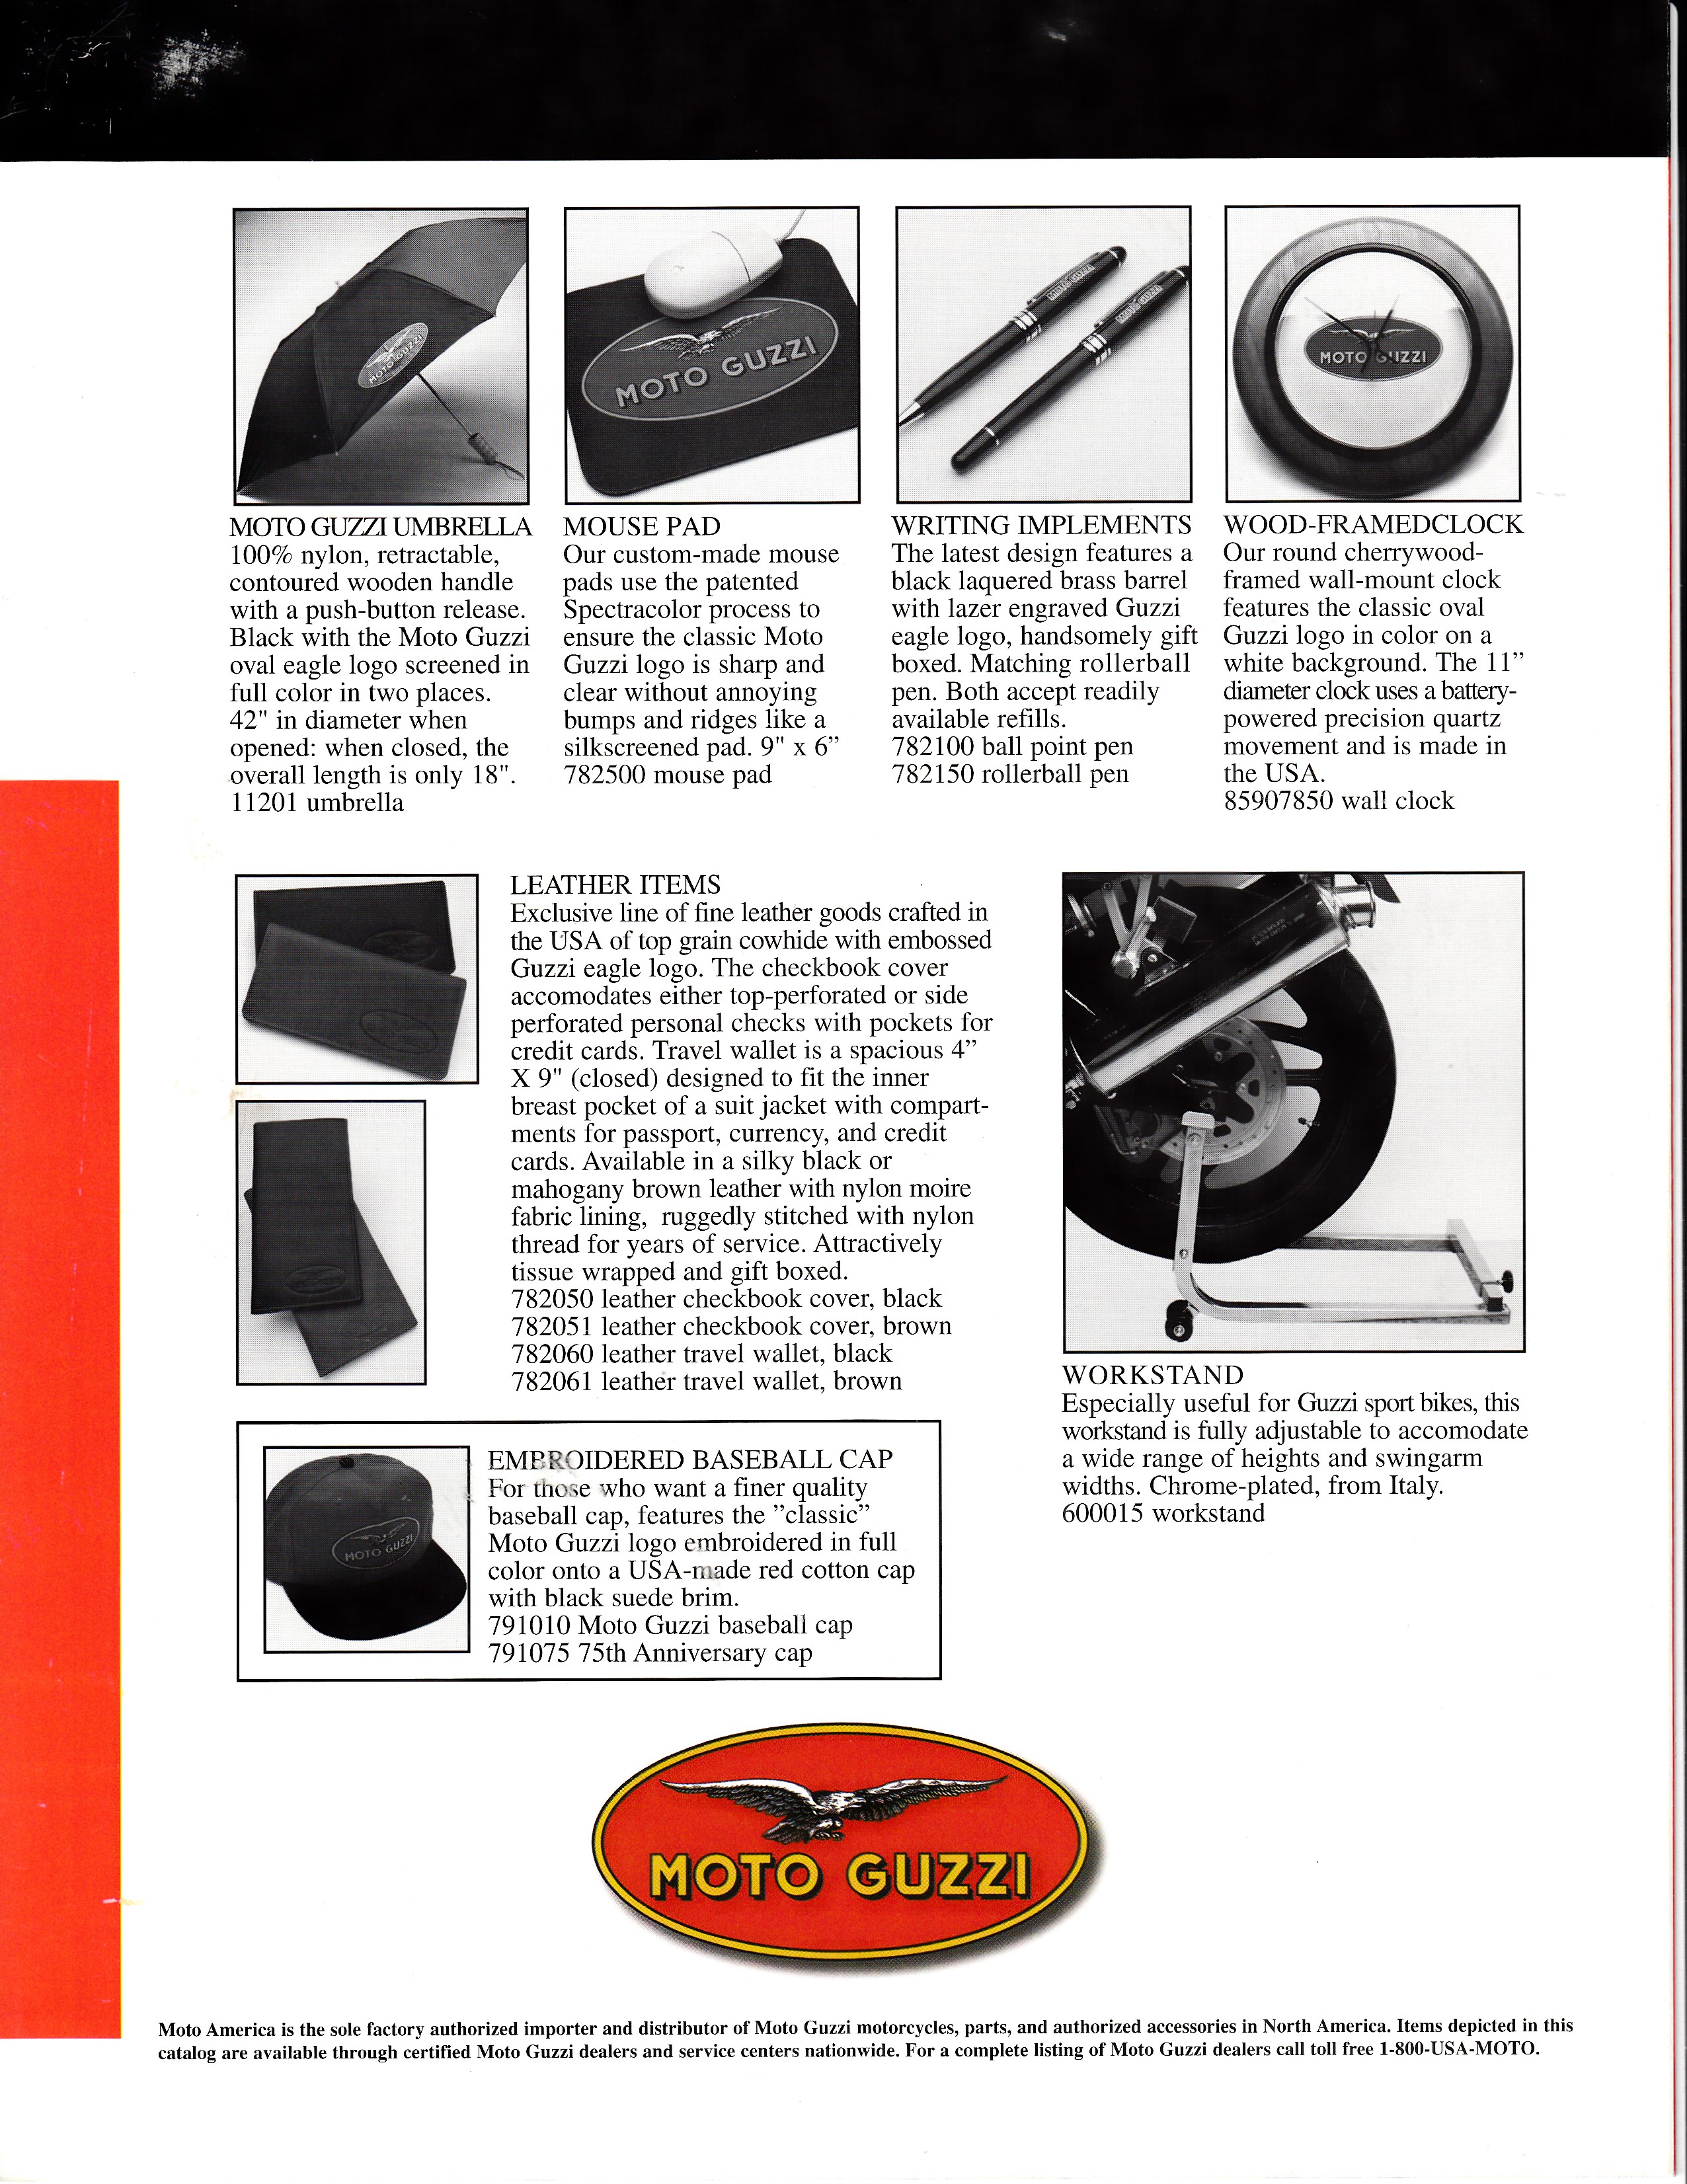 Brochure - Moto Guzzi Accessories (1998)